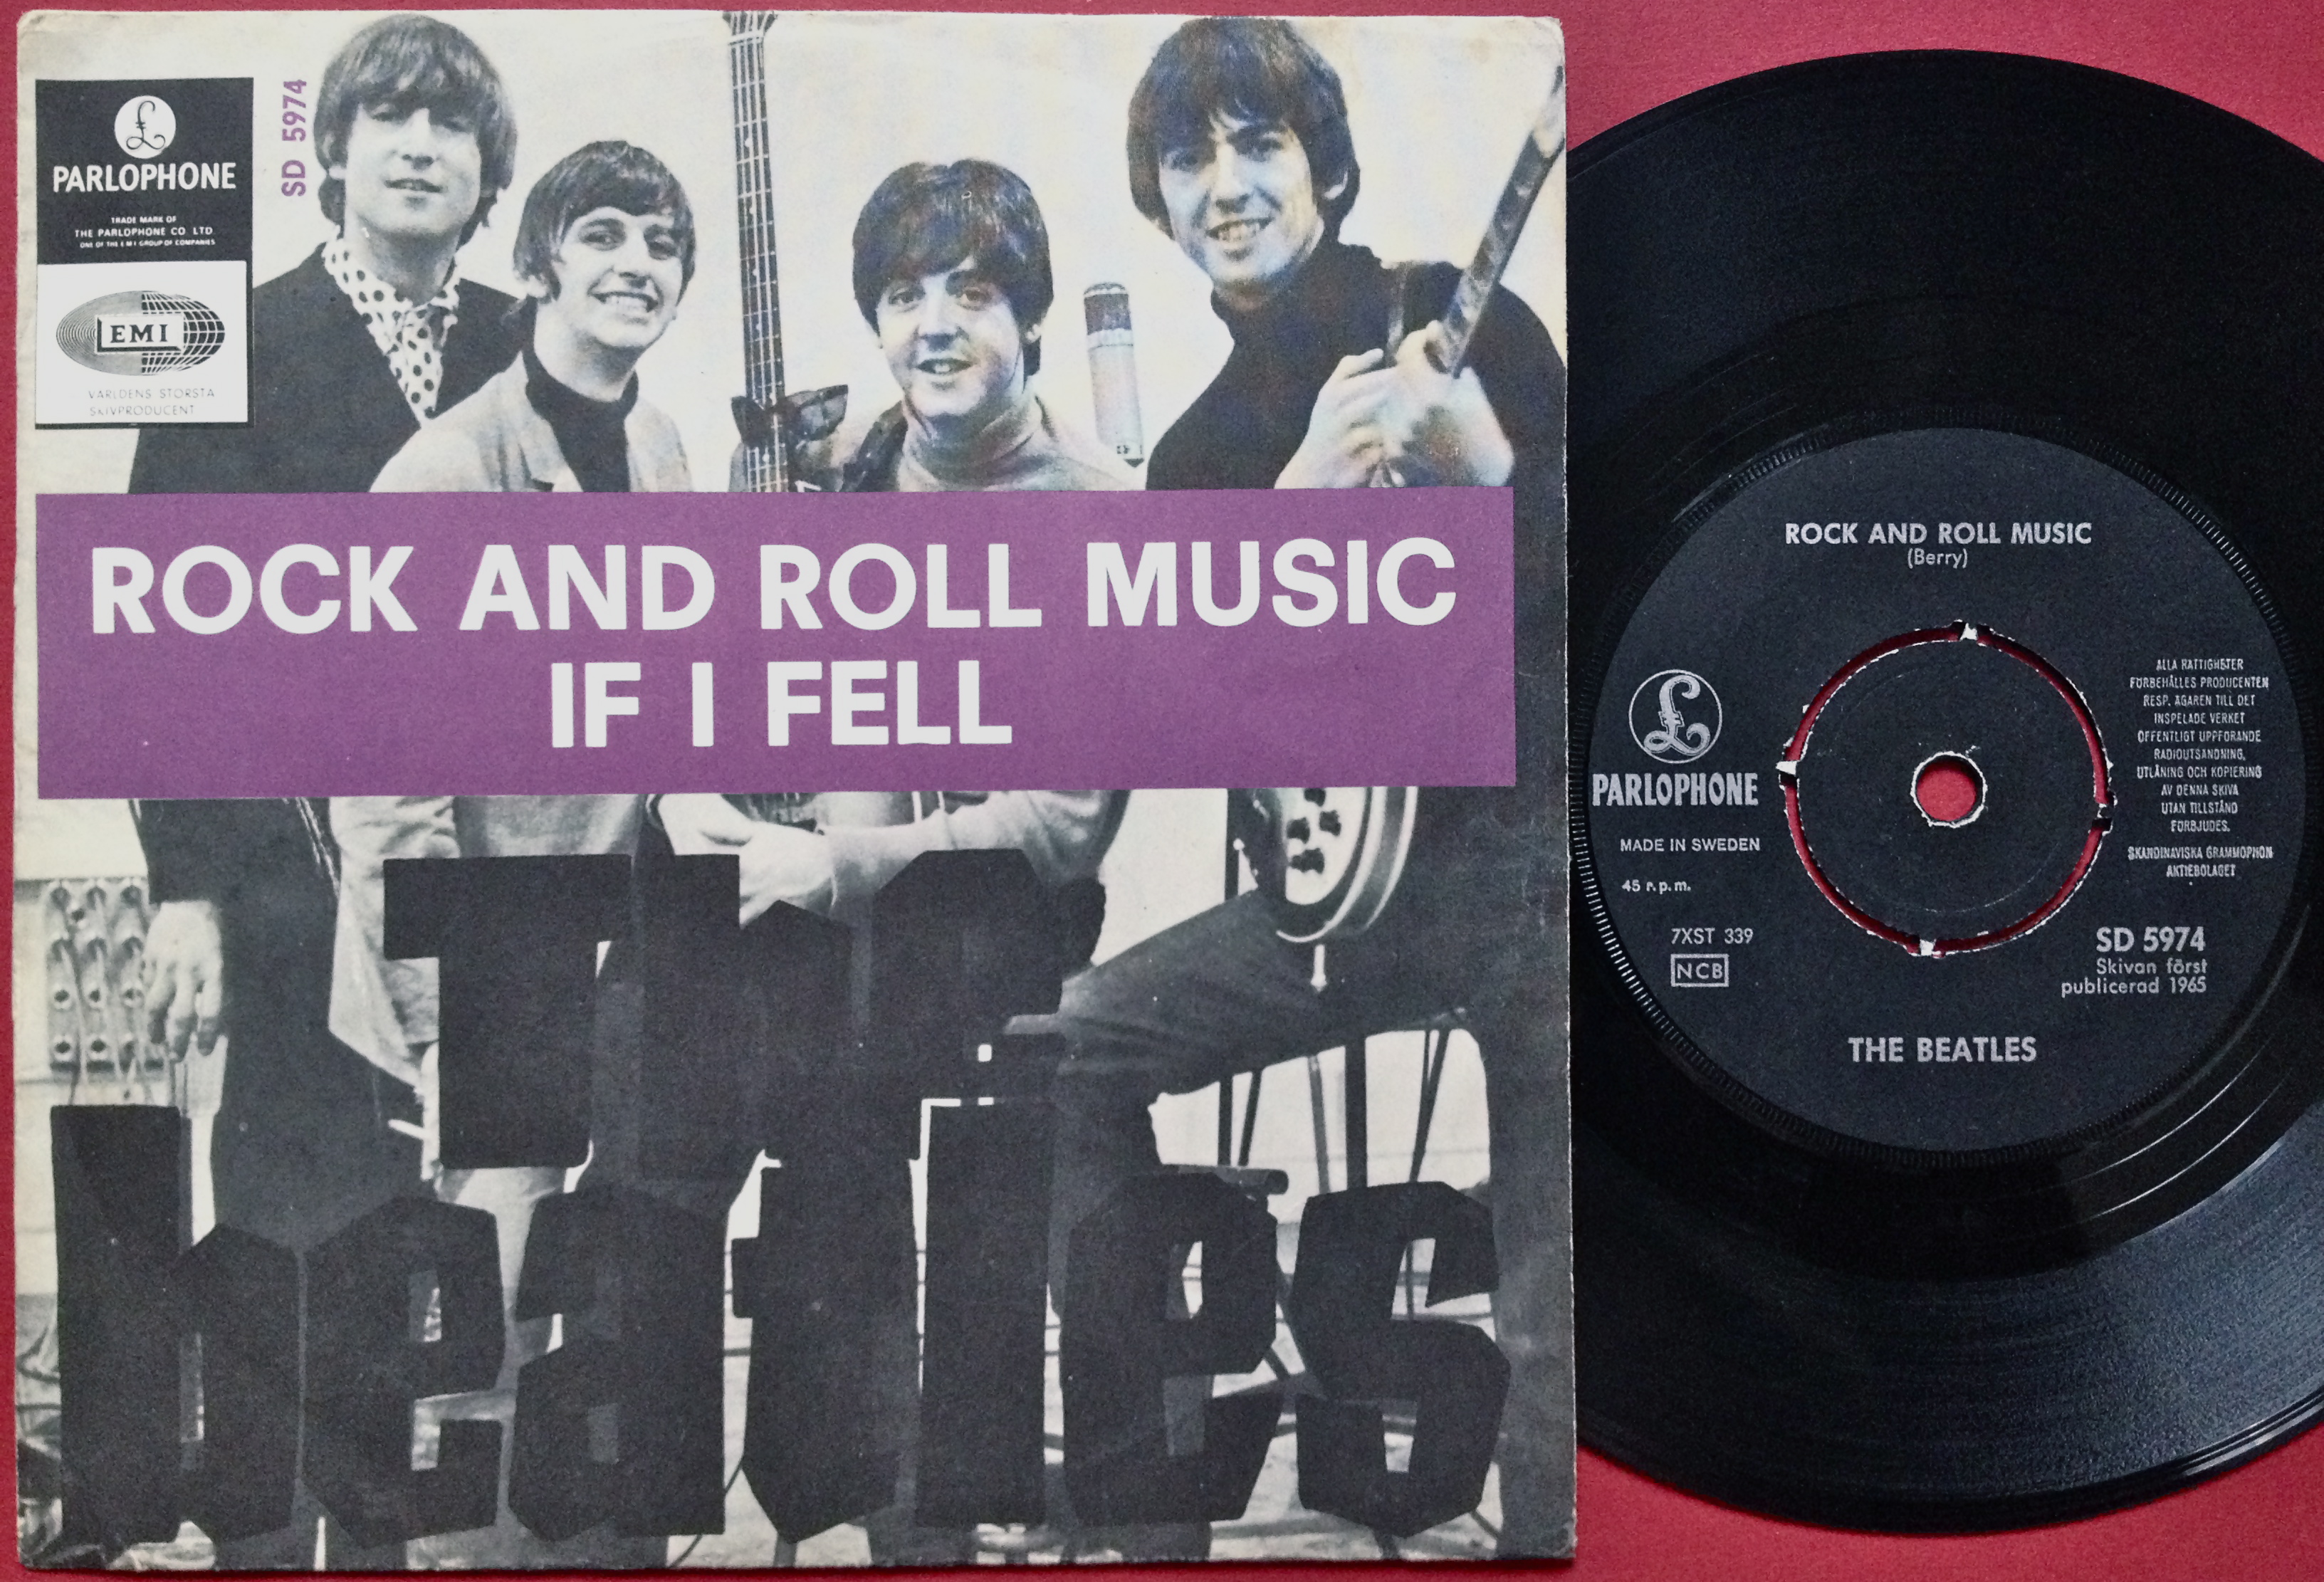 Rolling минус. Битлз рок-н-ролл. Beatles Rock and Roll Music. Beatles старенький автомобиль. The Beatles 1962–1966 the Beatles.